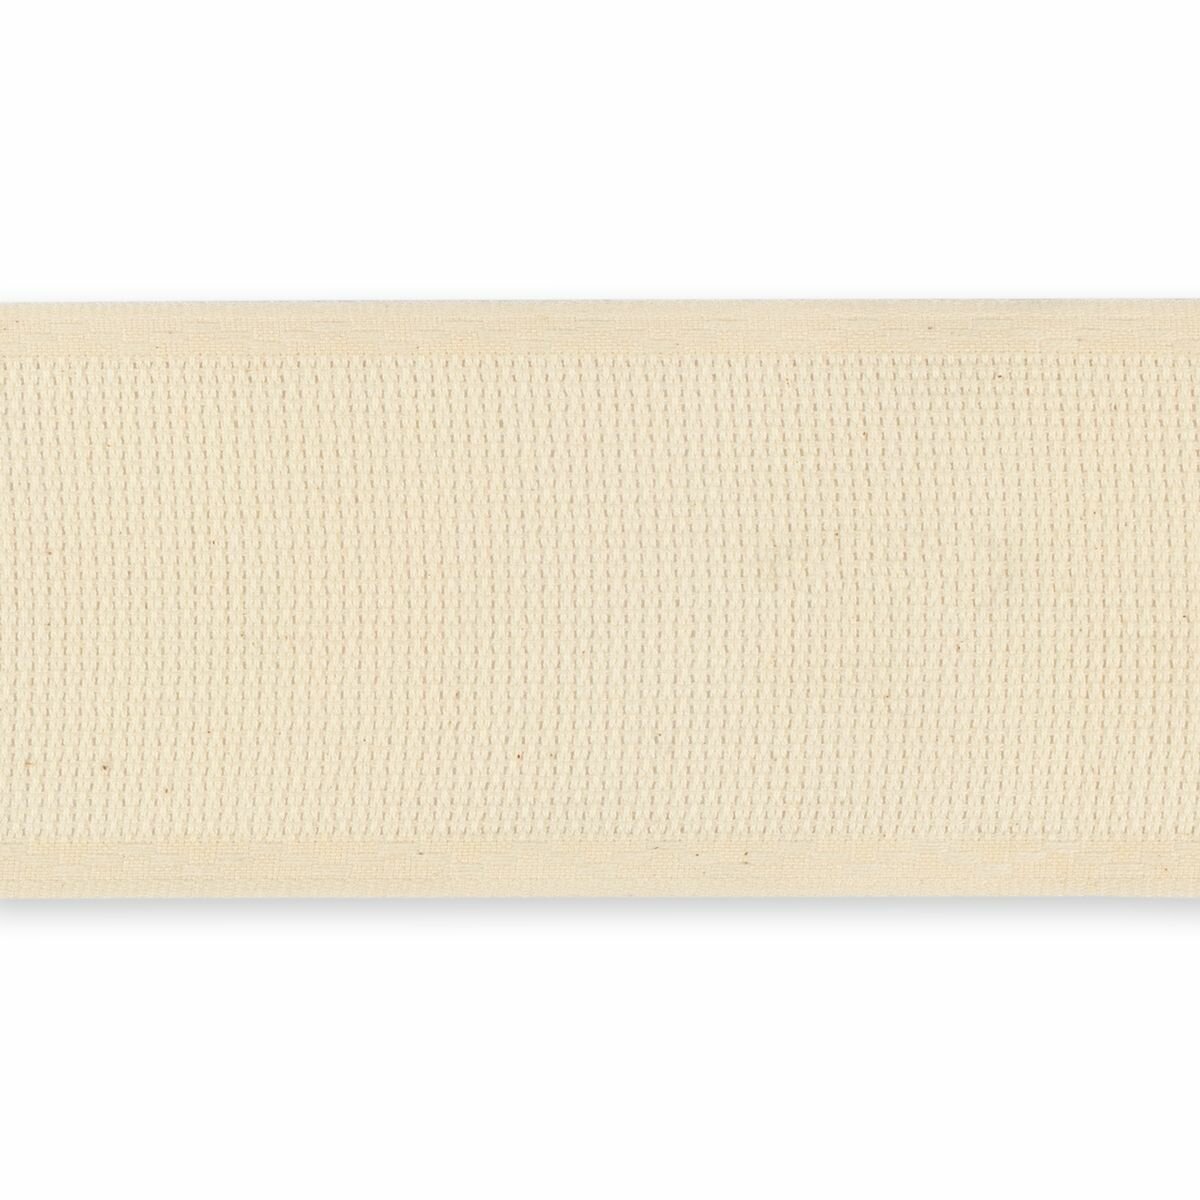 Канва-лента Aida №14 - 1 м. (цвет: кремовый, 100% хлопок, ширина 70 мм.)